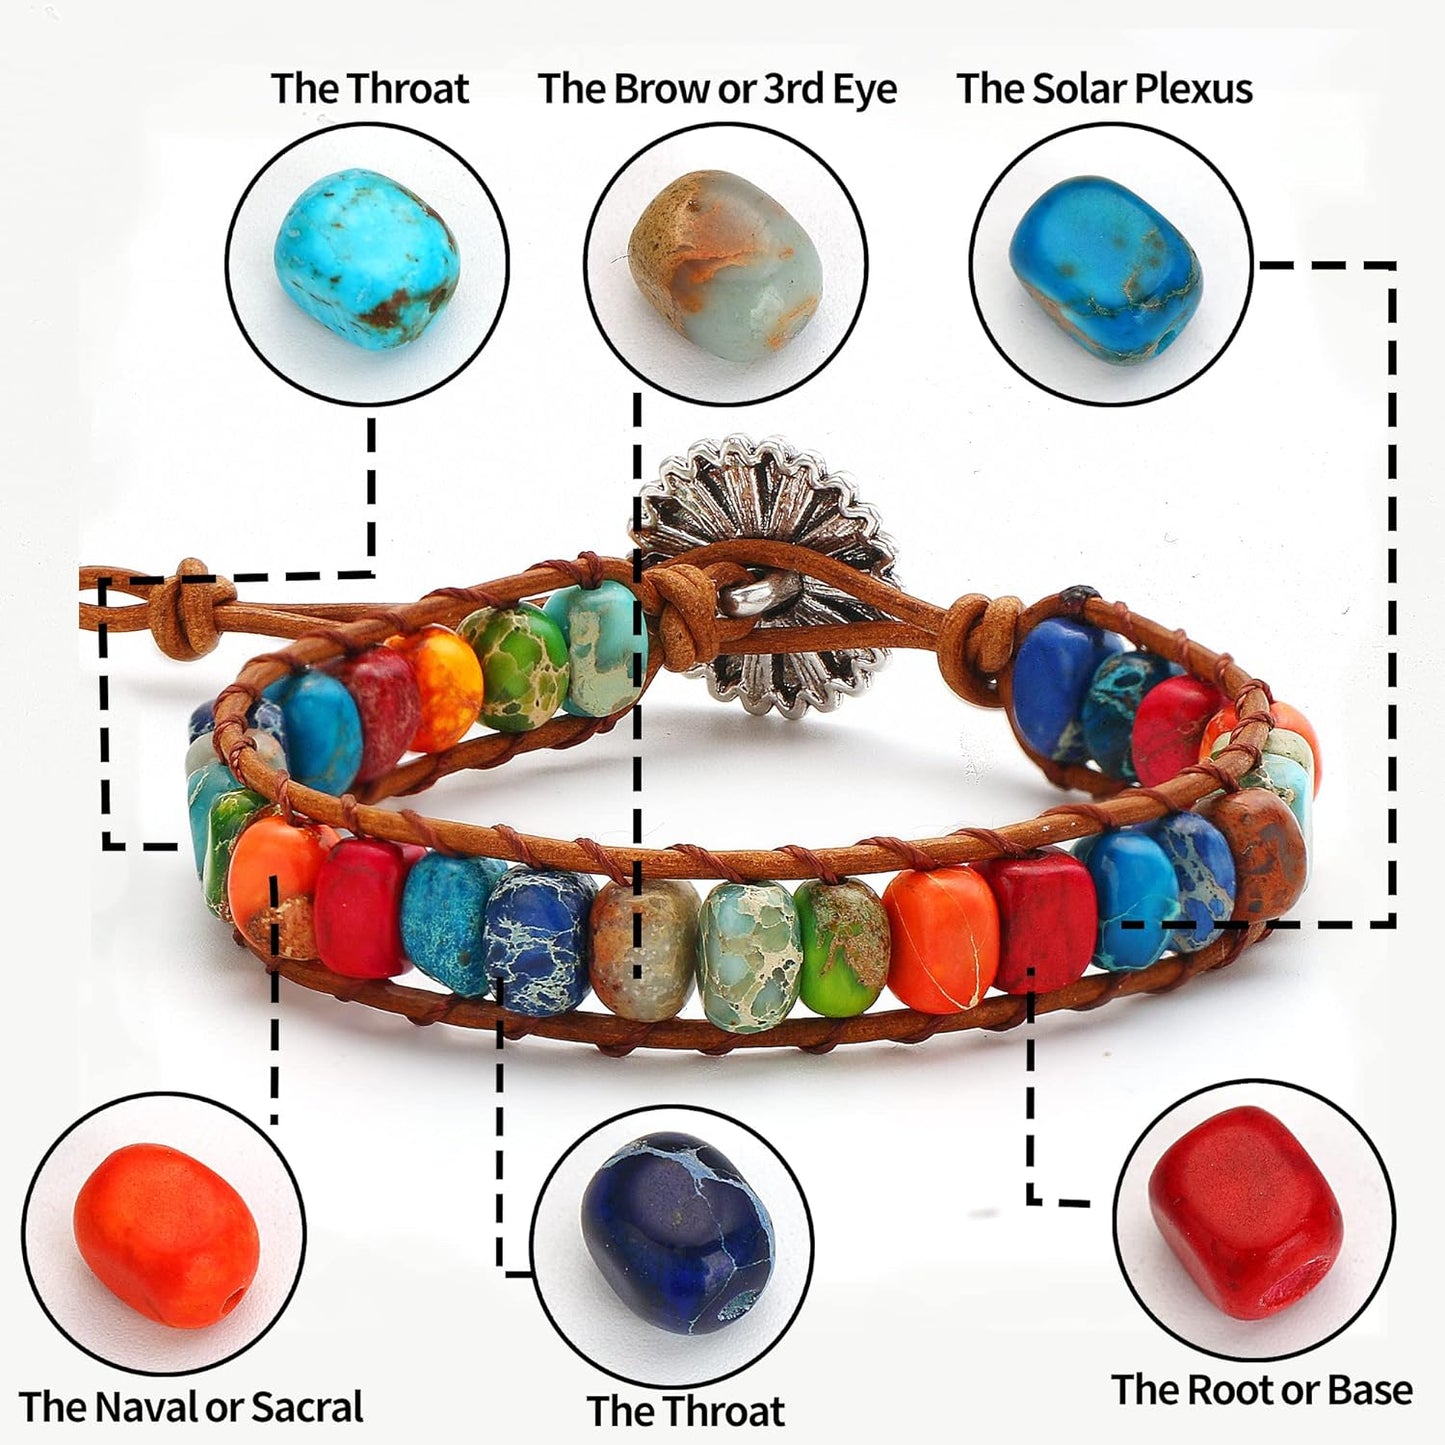 Spiritual Bracelets for Women with Hippie Stones Leather Wrap Healing Bead Bracelet Women Men